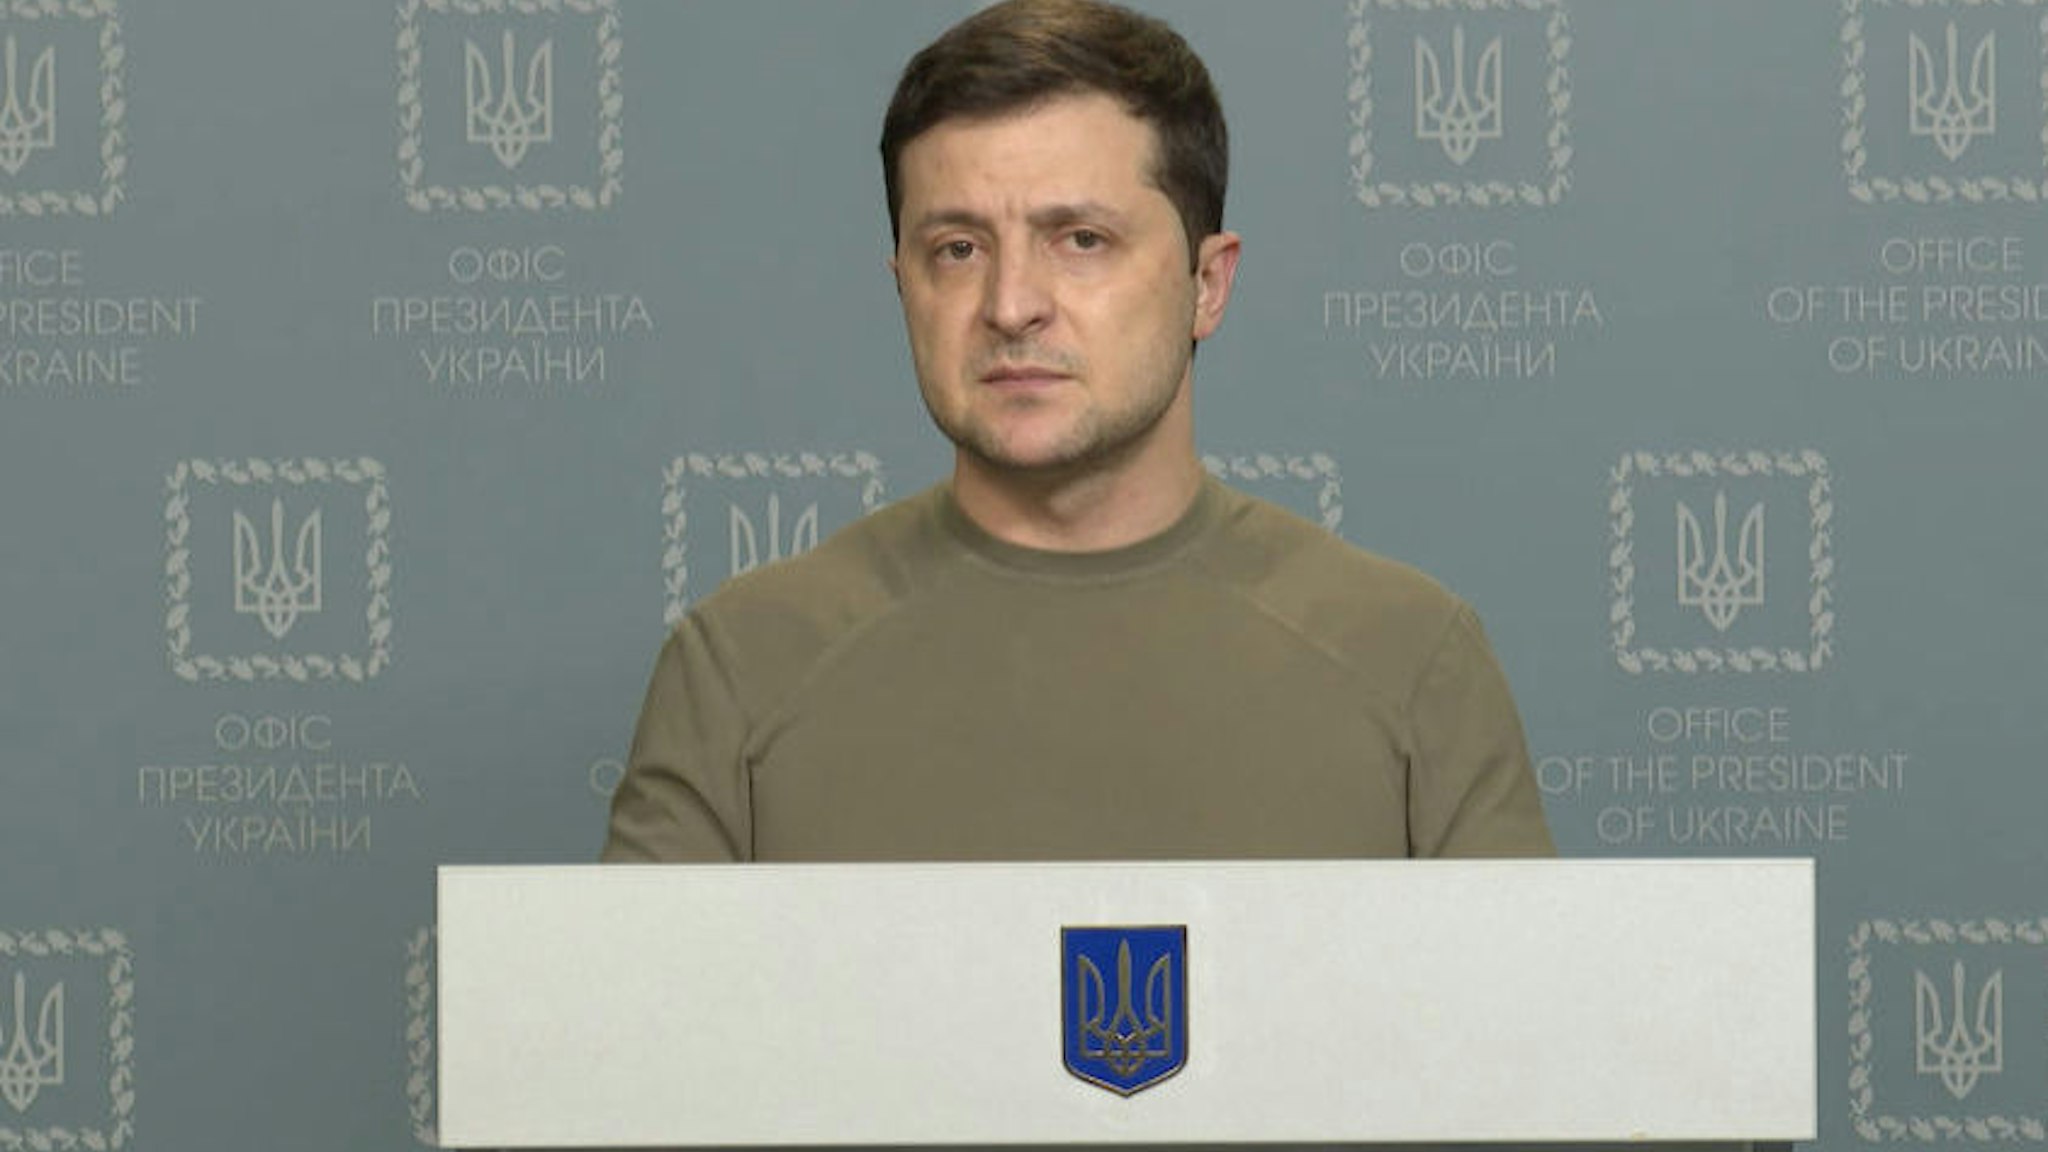 Ukrainian President Volodymyr Zelenskyy holds a press conference in regard of Russia's attack on Ukraine in Kiev, Ukraine on February 24, 2022.